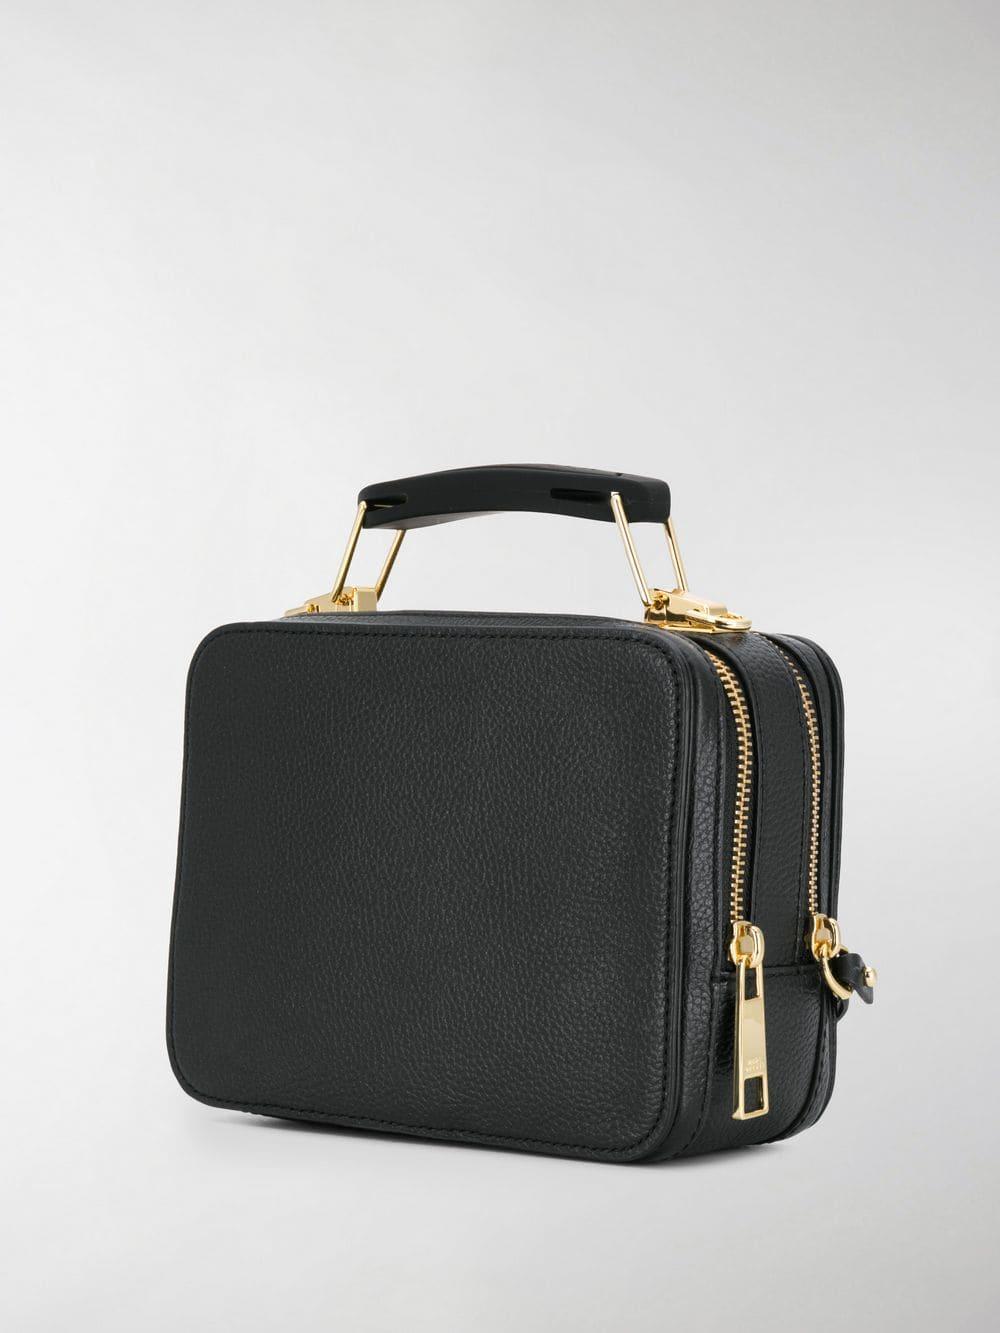 Marc Jacobs The Box 20 Shoulder Bag in Black - Lyst